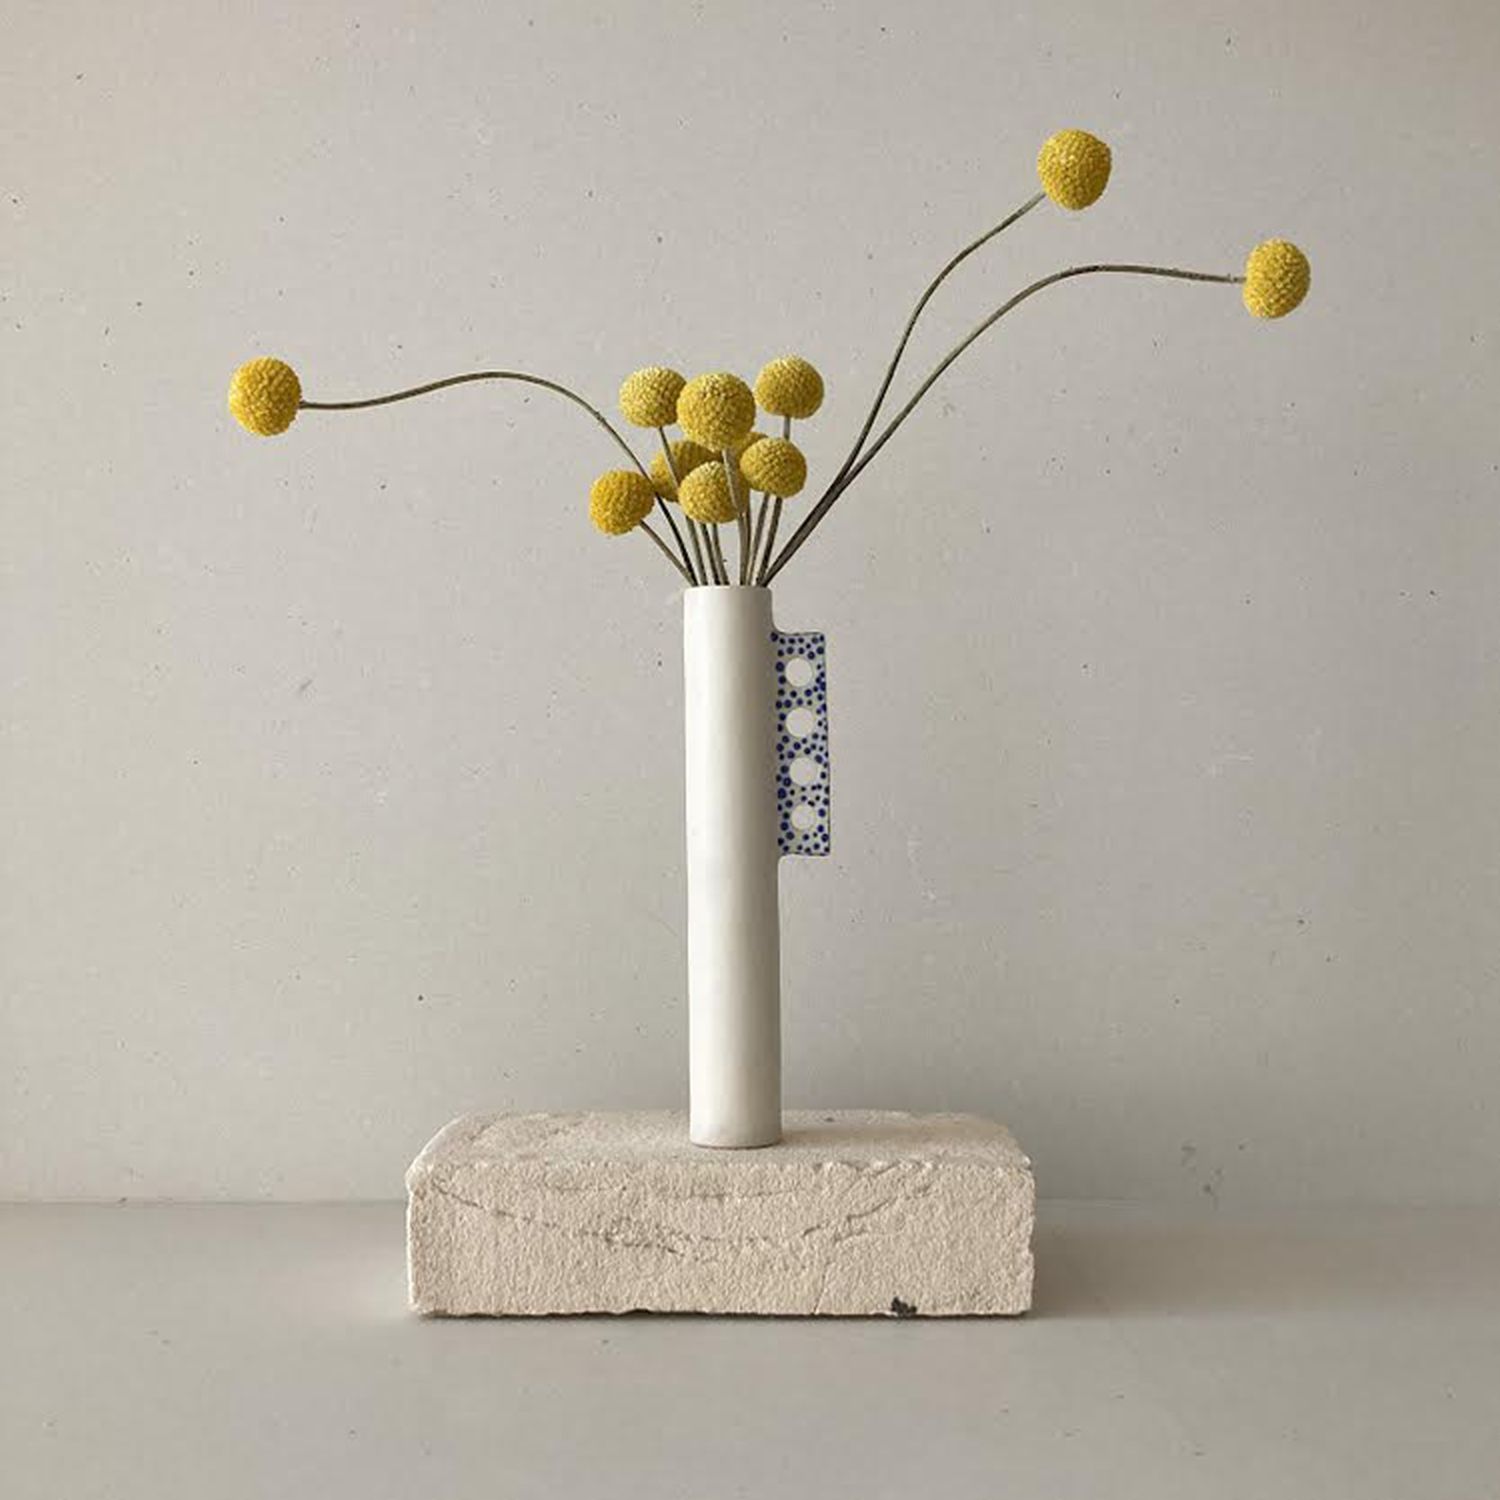 Mati Ceramics: Asymmetrical Dot Vase Product Image 1 of 1